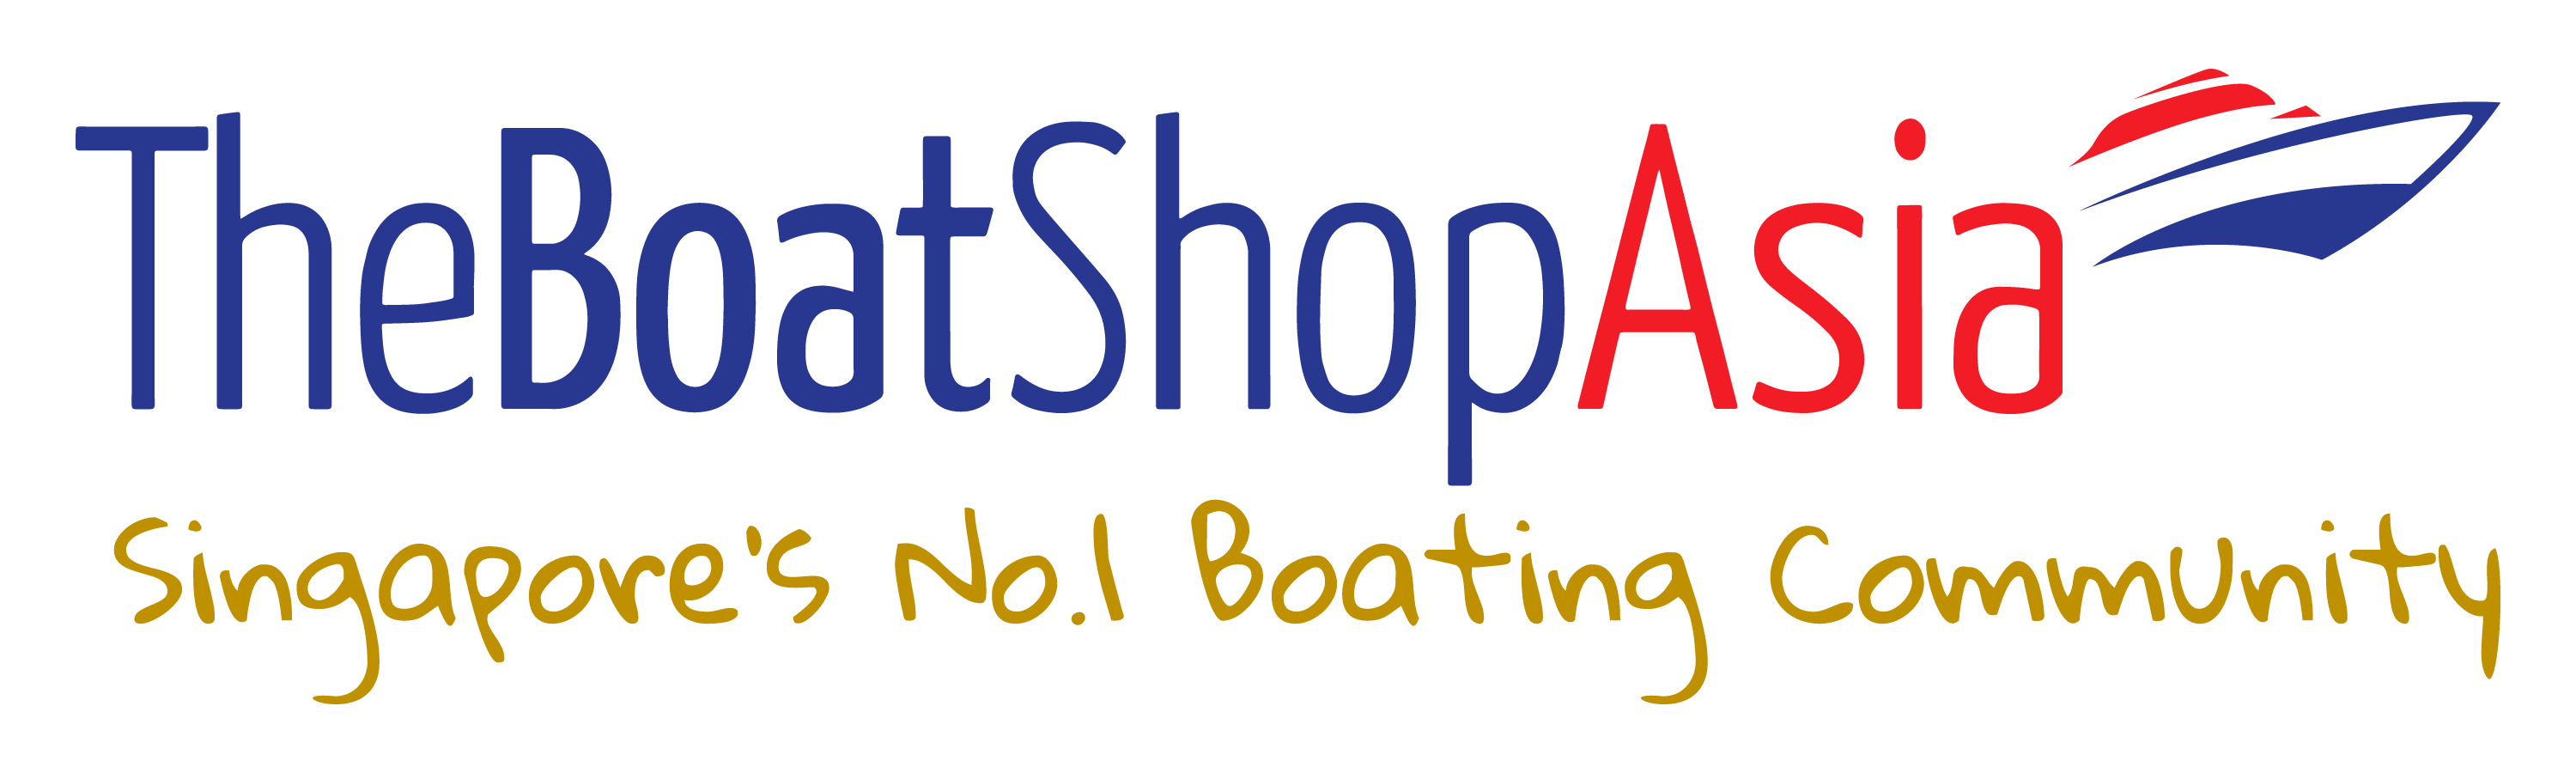 The Boat Shop Pte. Ltd. company logo